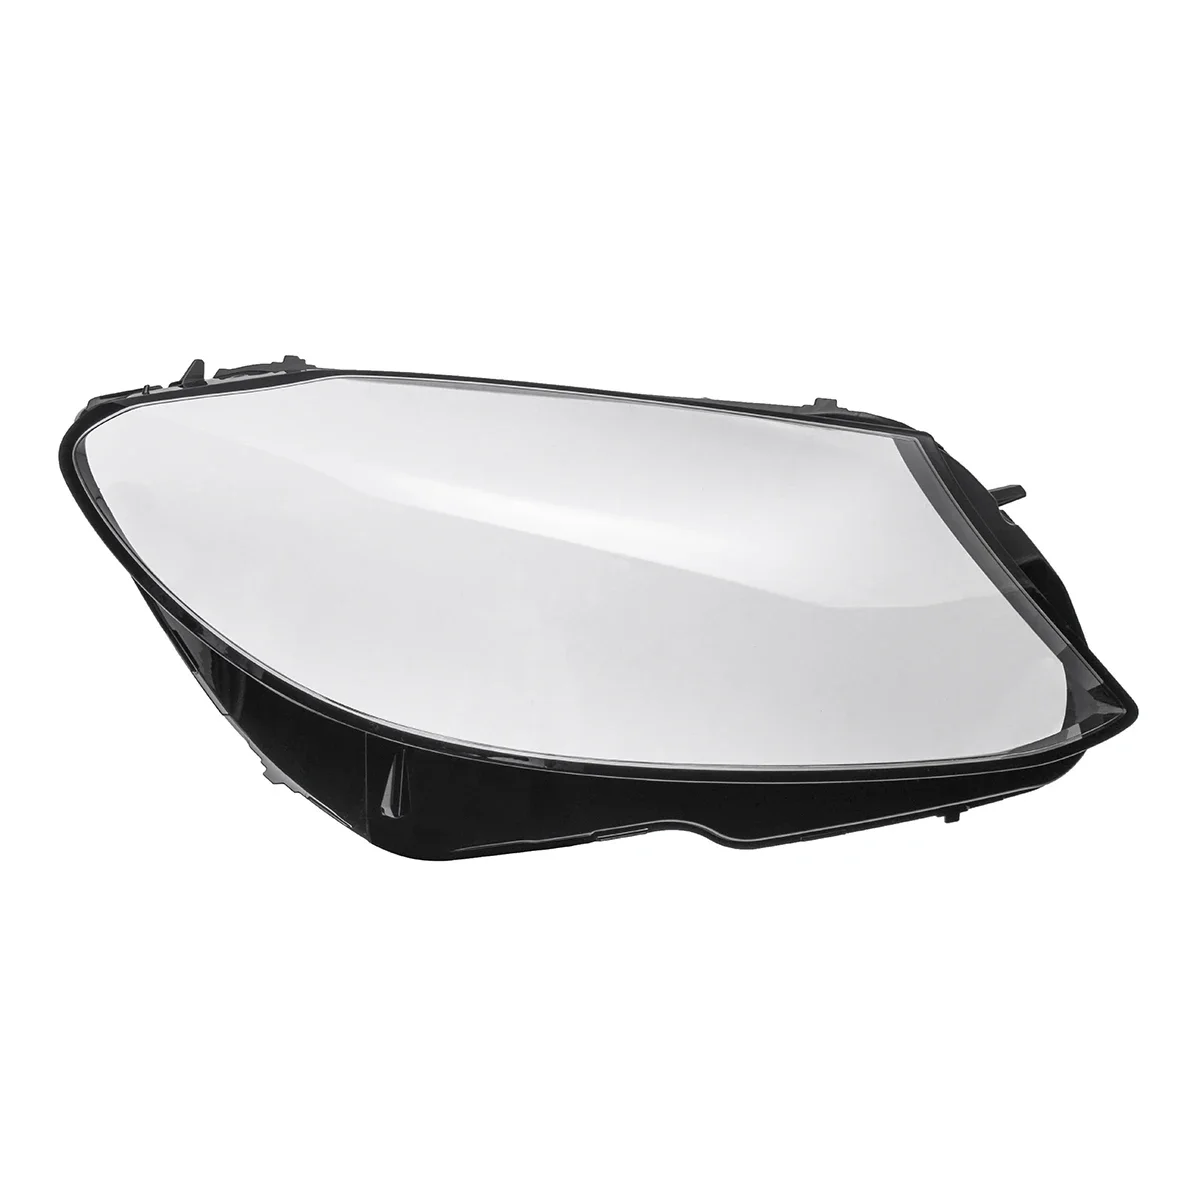 L / R Car Headlamp Cover Transparent Lampshade Headlight Lens Shell For Mercedes Benz W205 C180 C200 C260L C280 C300 2015-2018